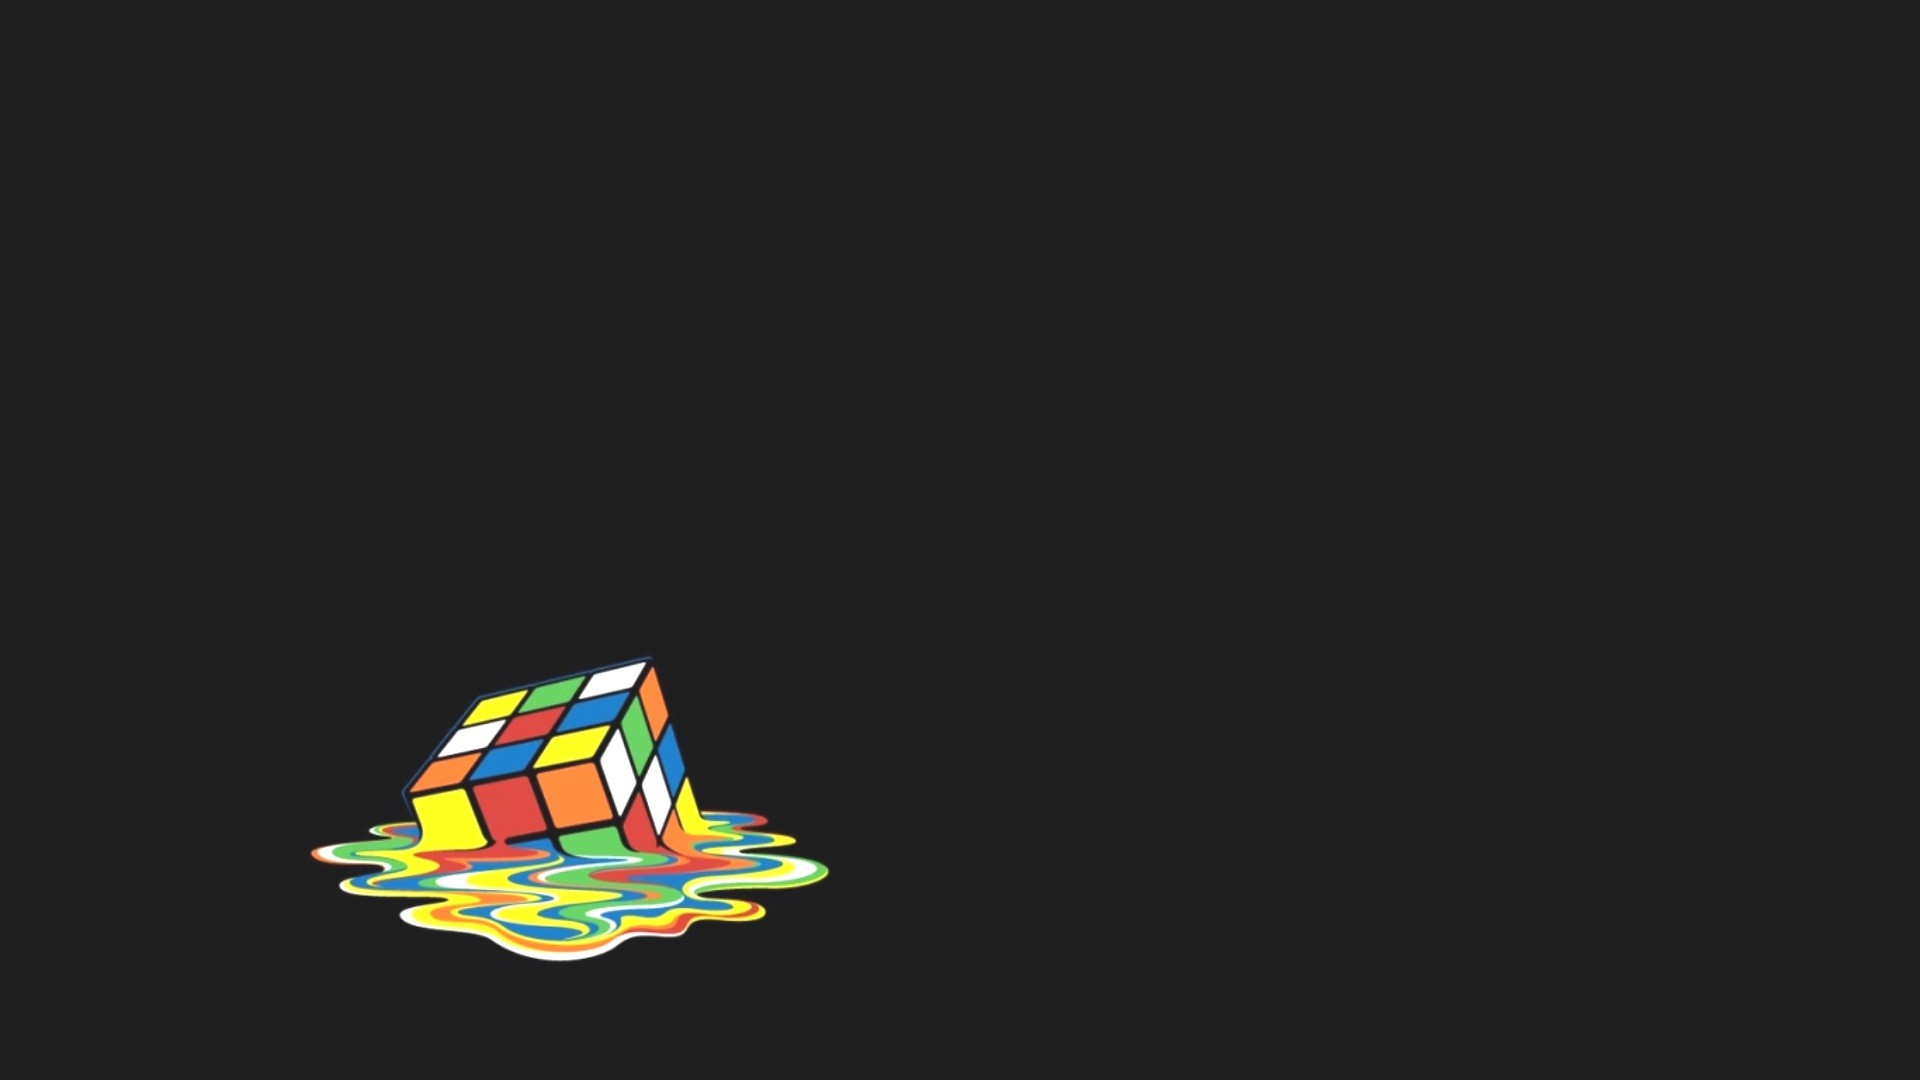 General 1920x1080 Rubik's Cube simple background artwork melting 3D Blocks black background surreal dice cube